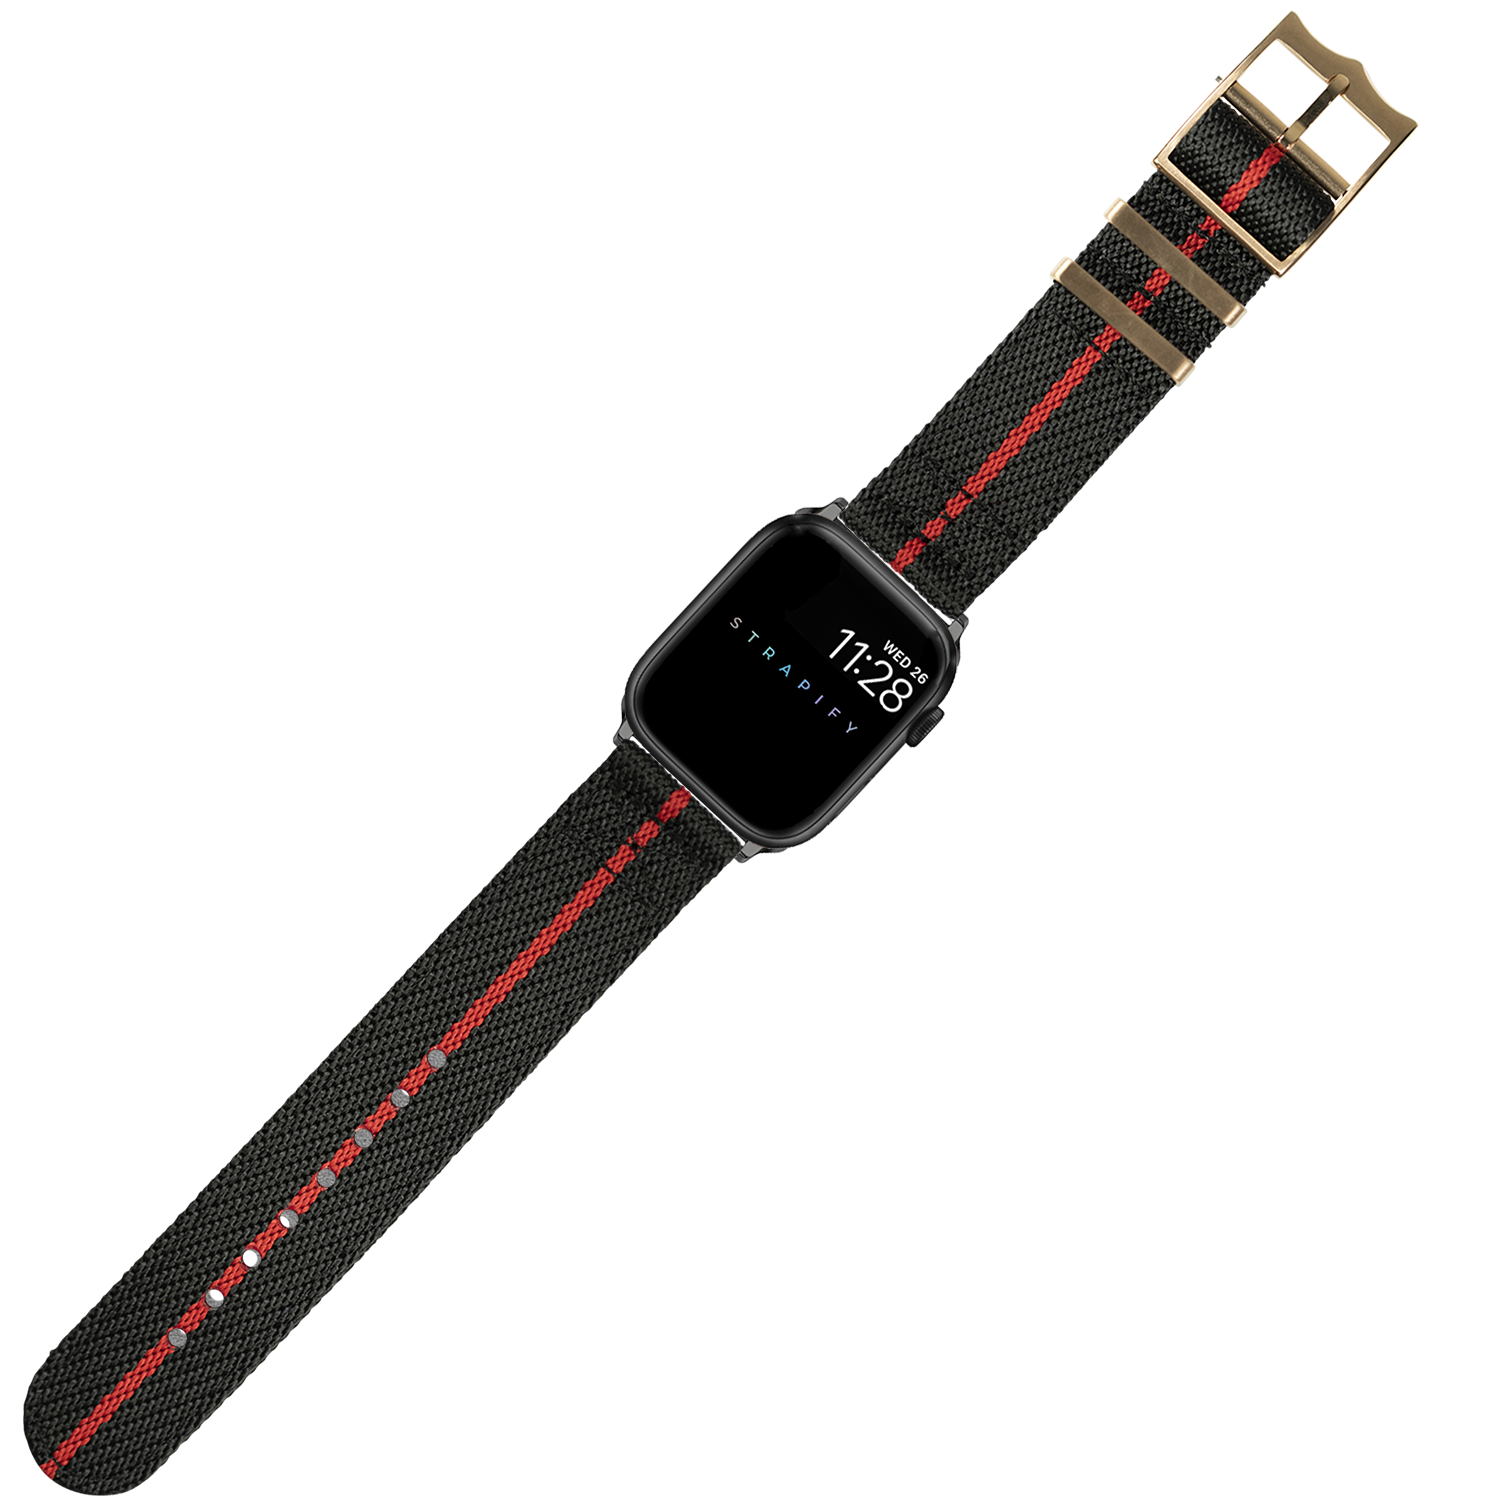 [Apple Watch] Cross Militex - Black / Red [Rose Gold Hardware]